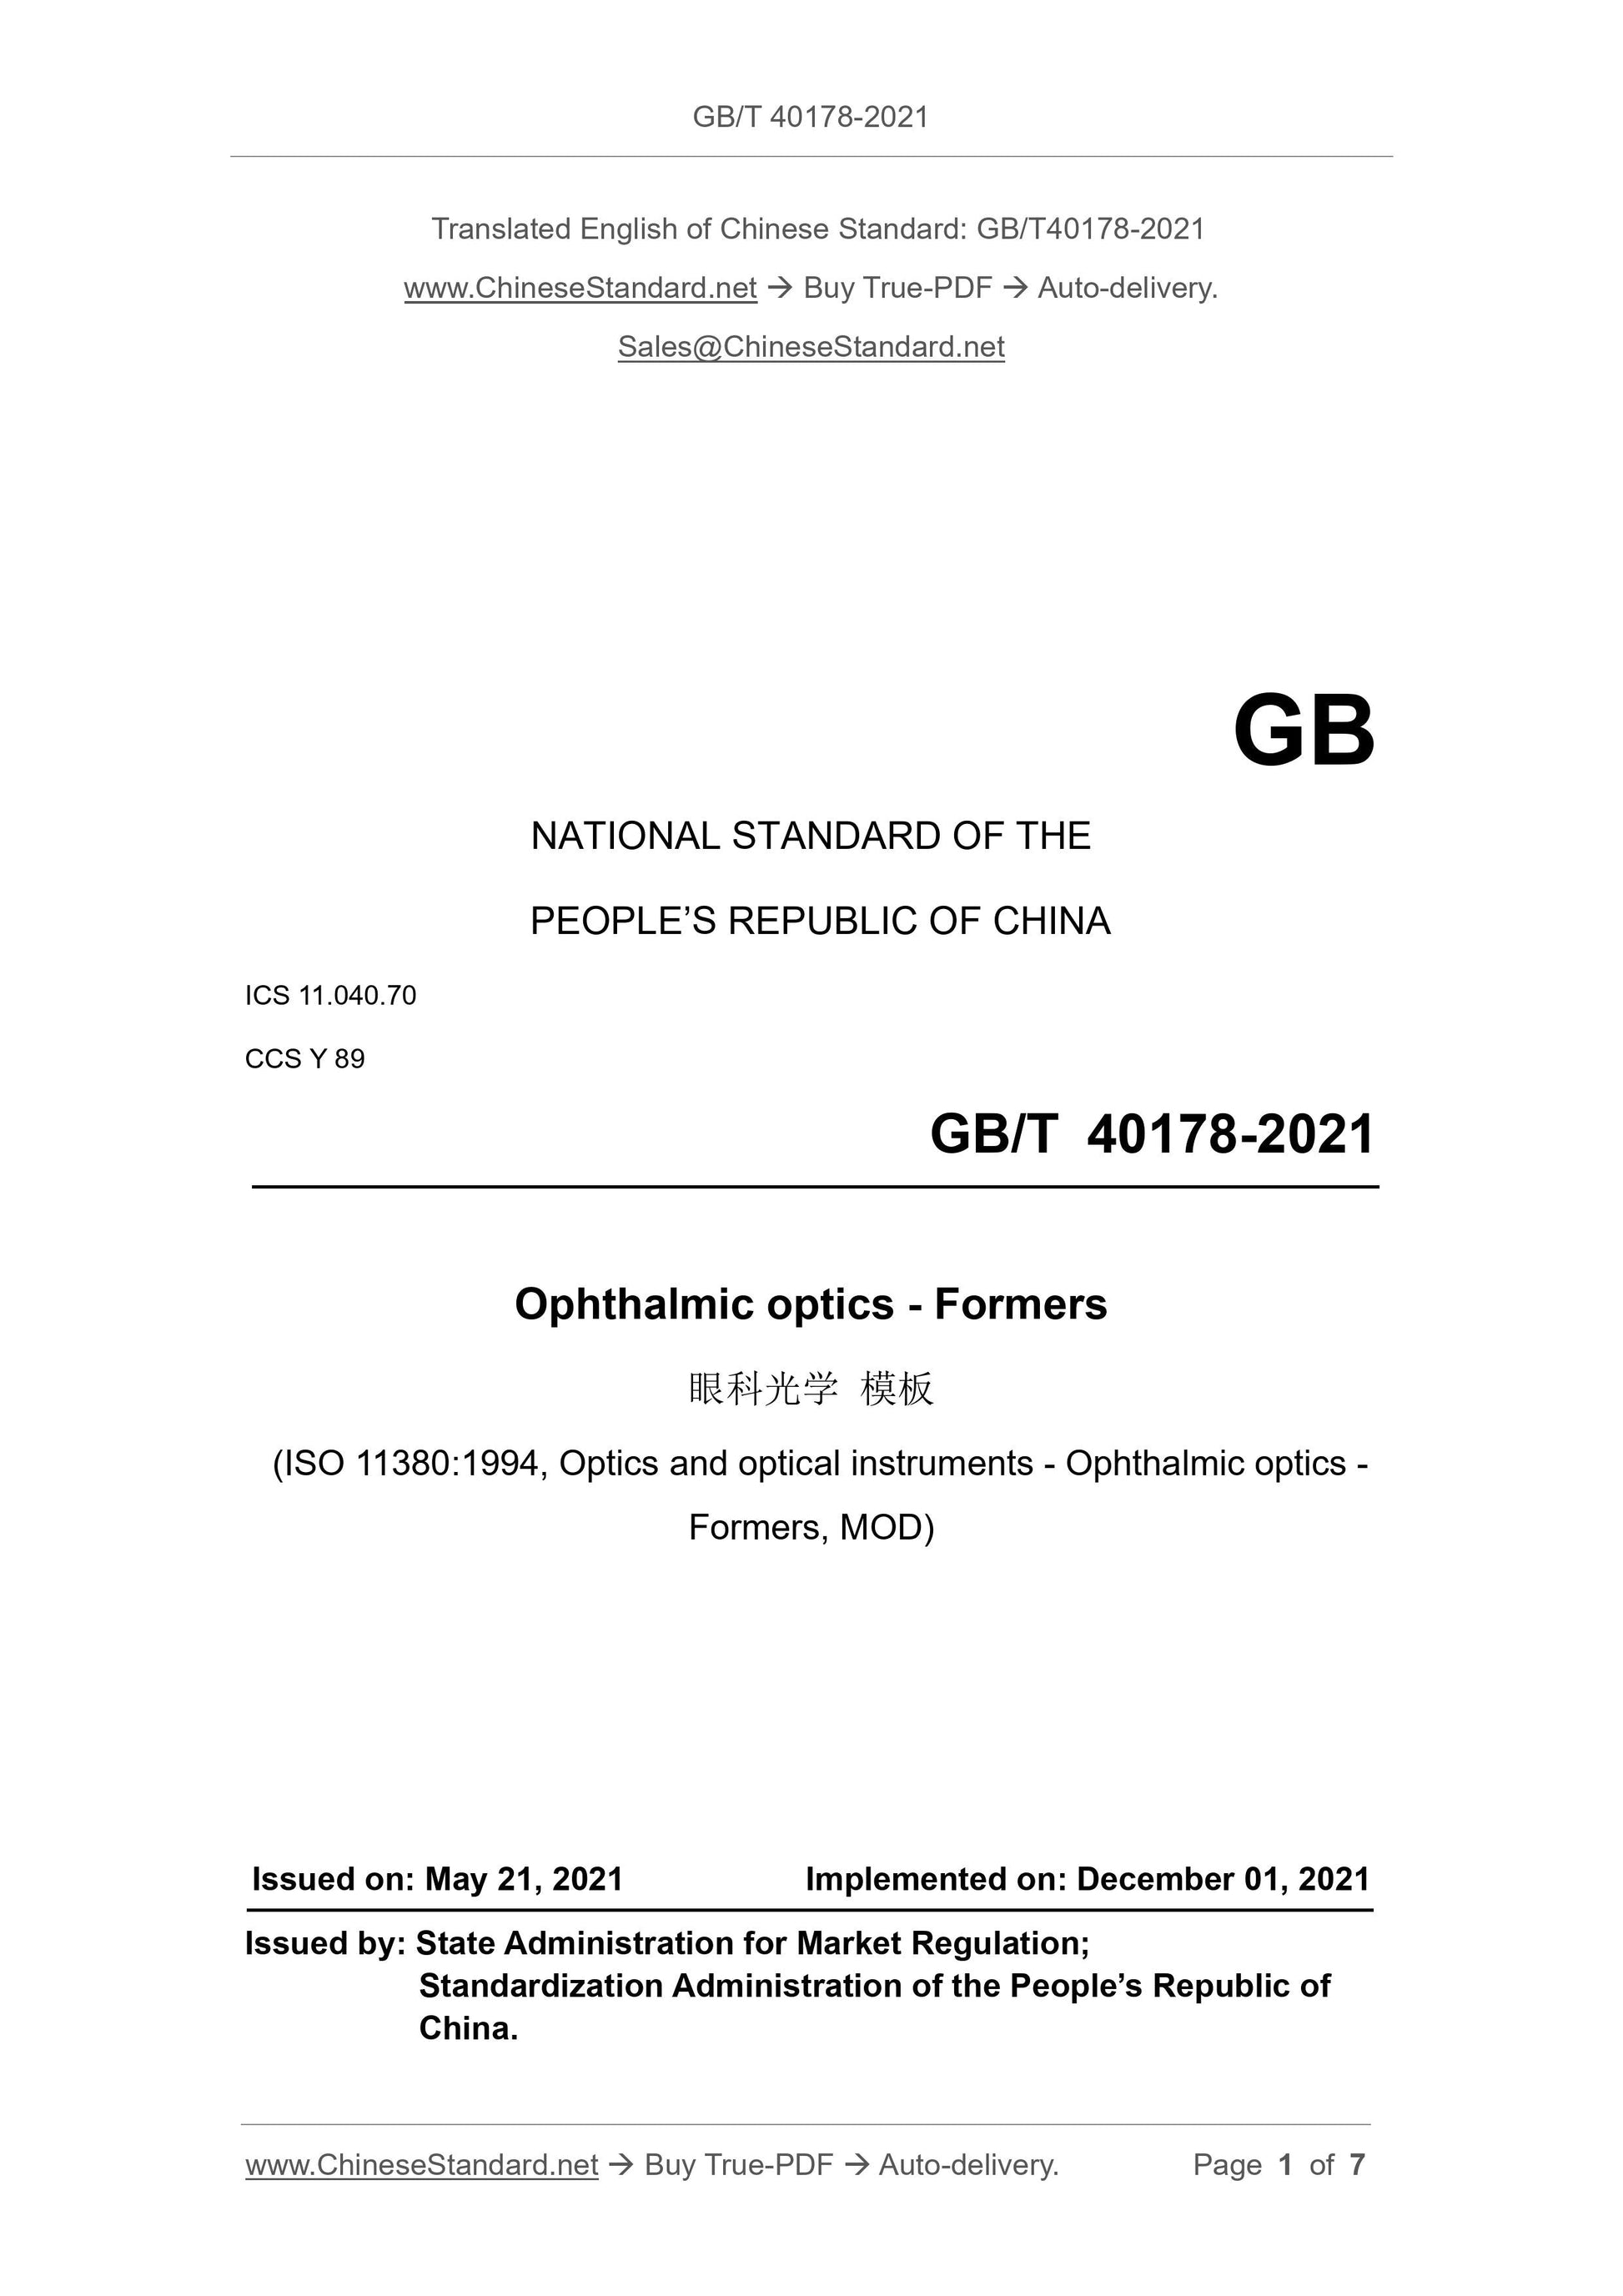 GBT40178-2021 Page 1